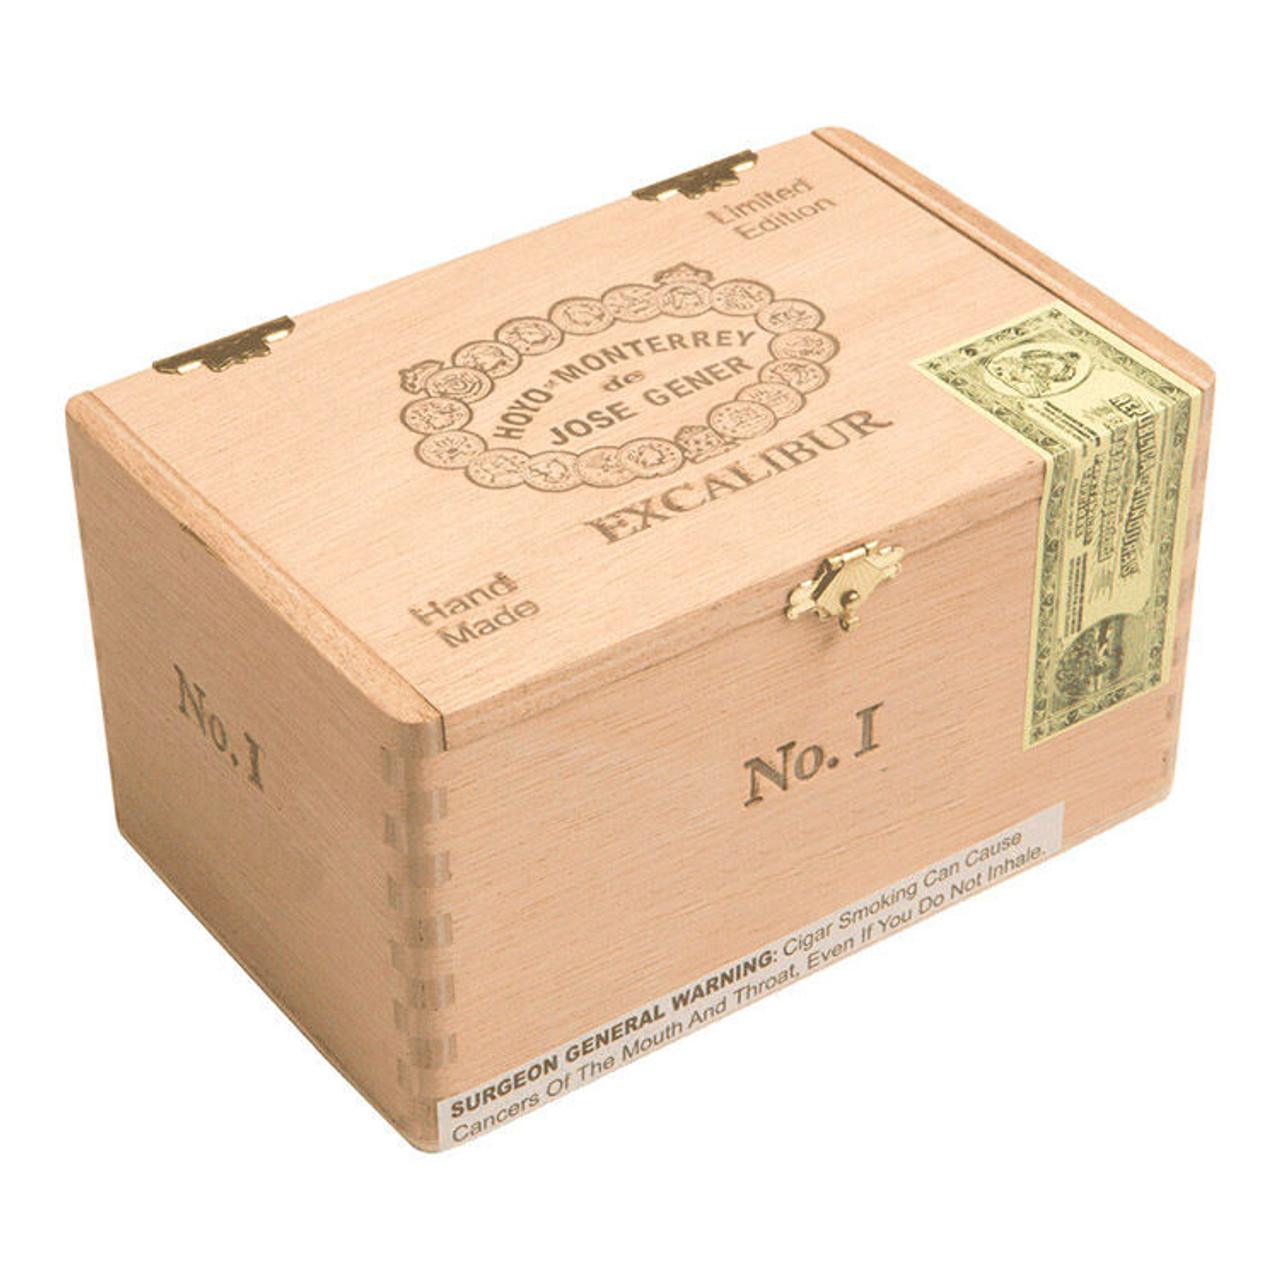 Excalibur No. III Cigars - 6.12 x 48 (Box of 20) *Box